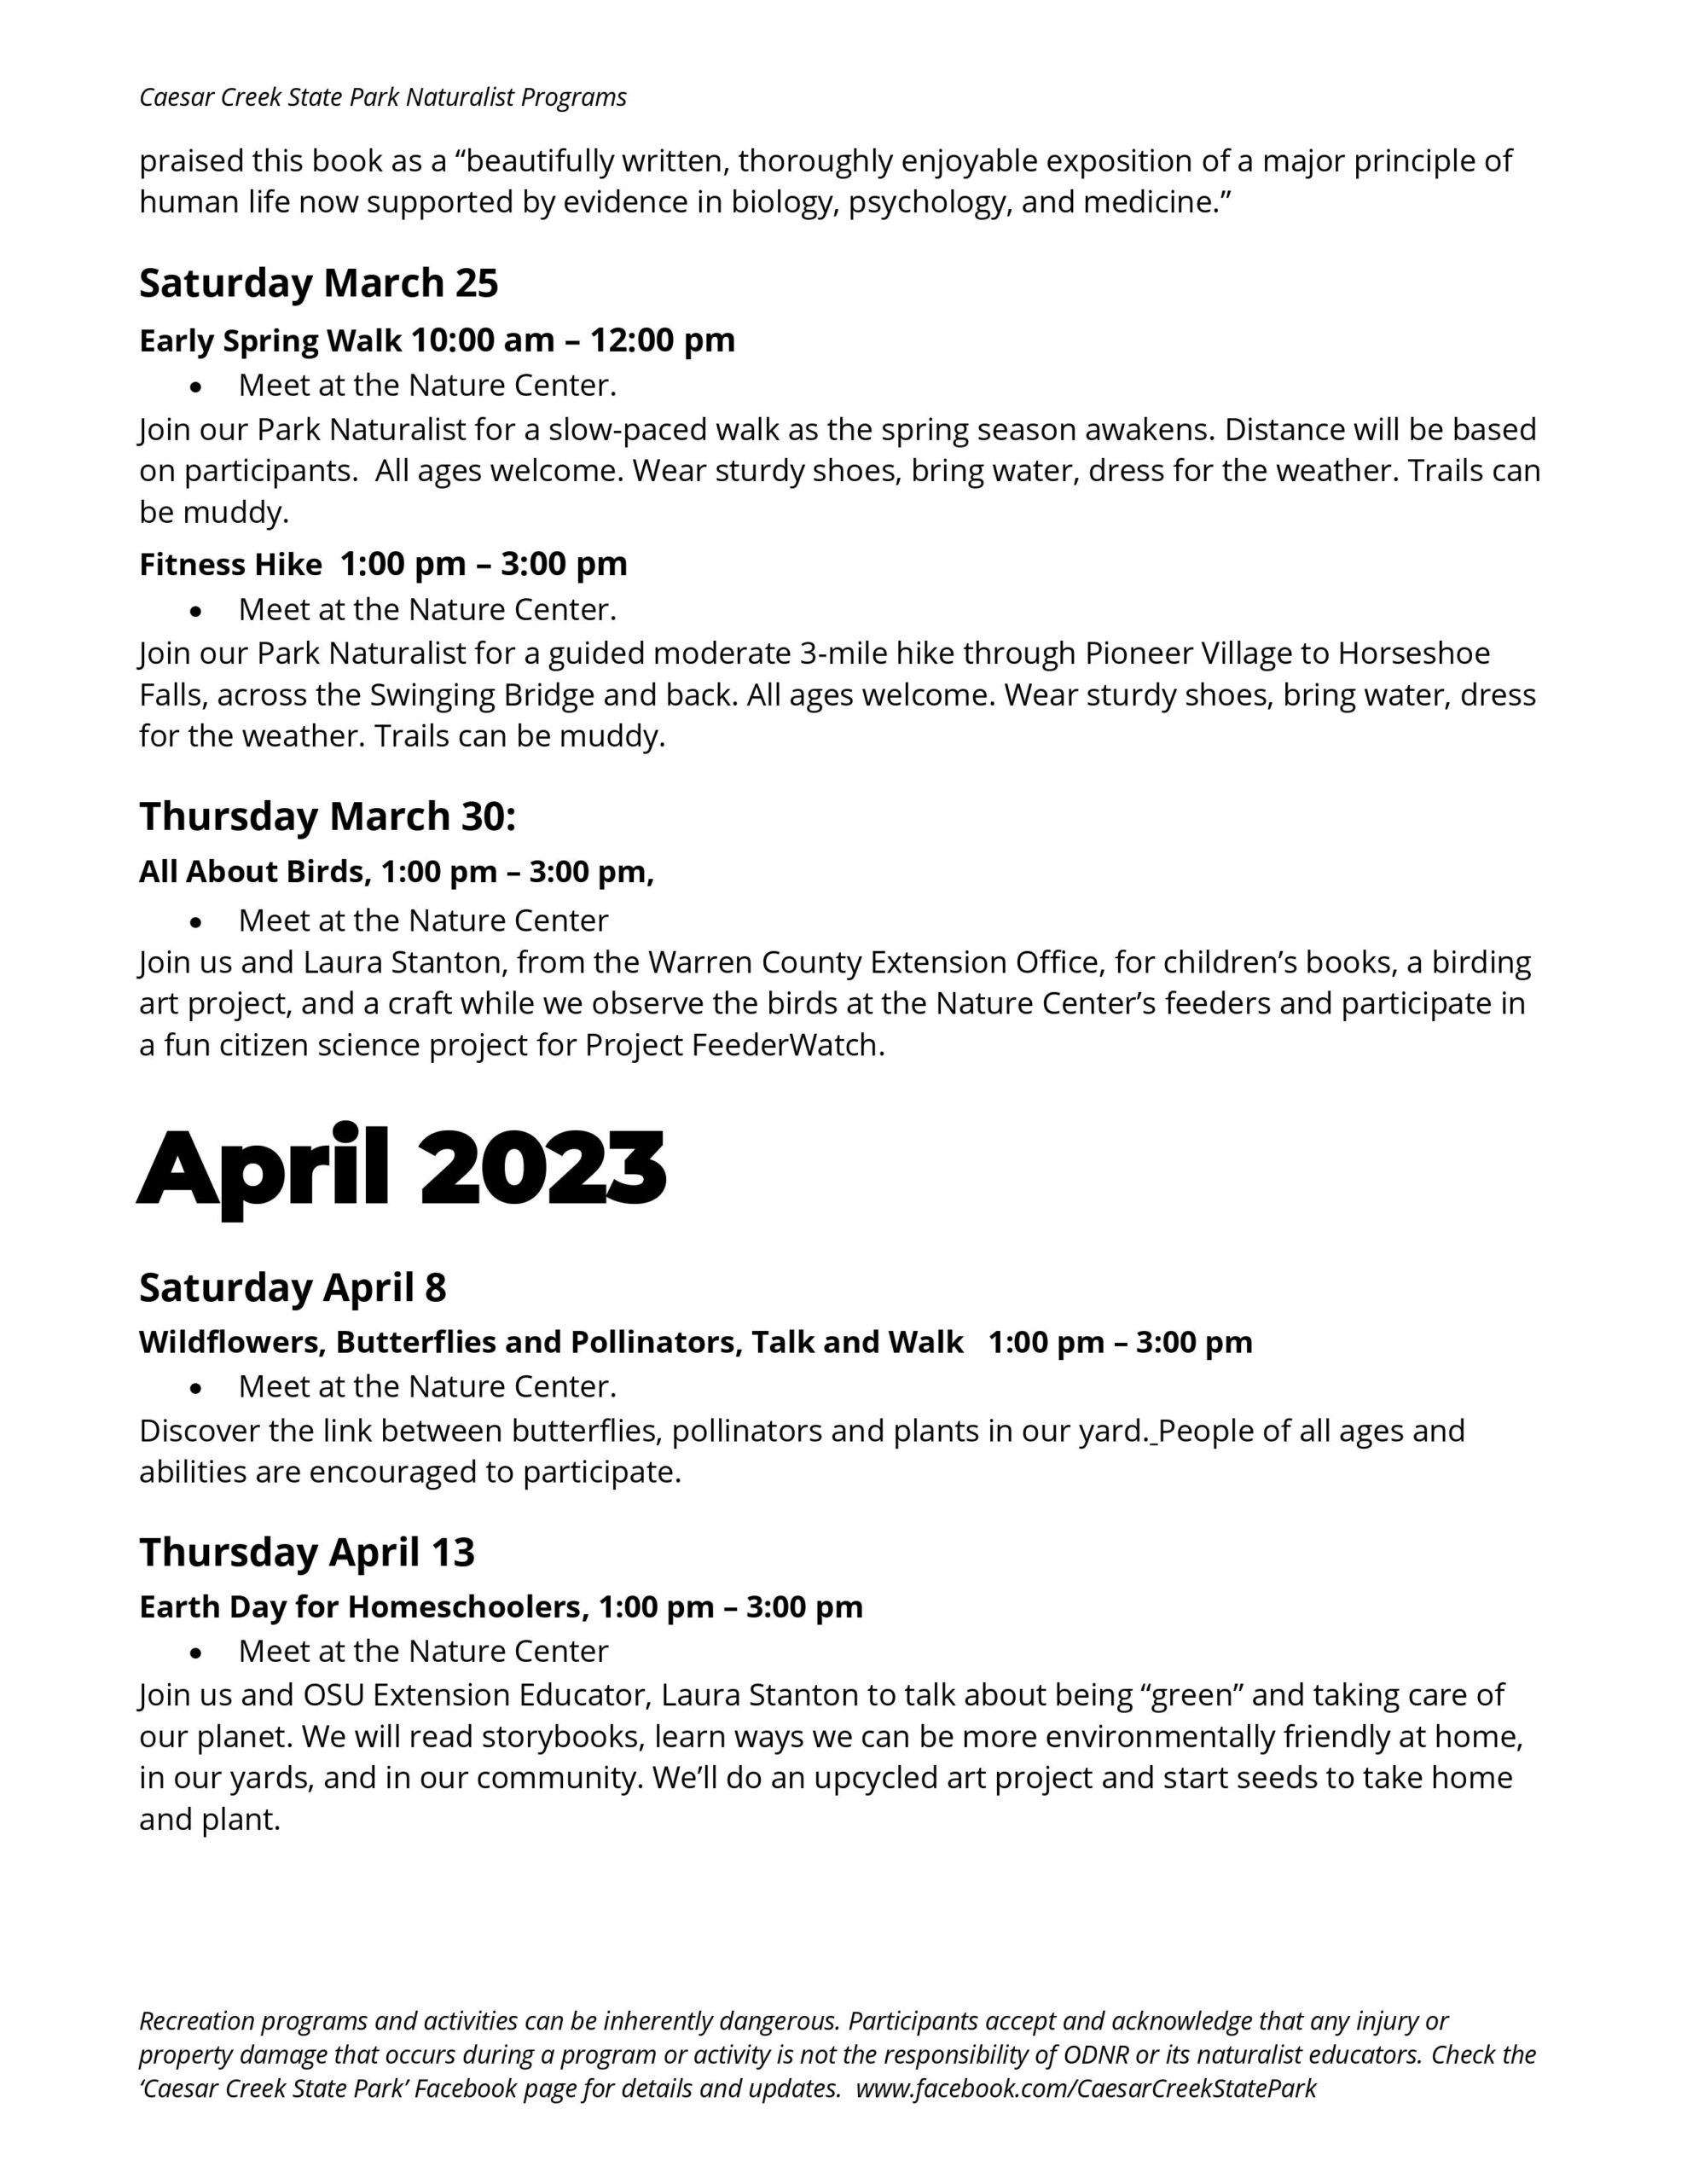 Caesar Creek State Park Naturalist Programs March 2023 to April 2023